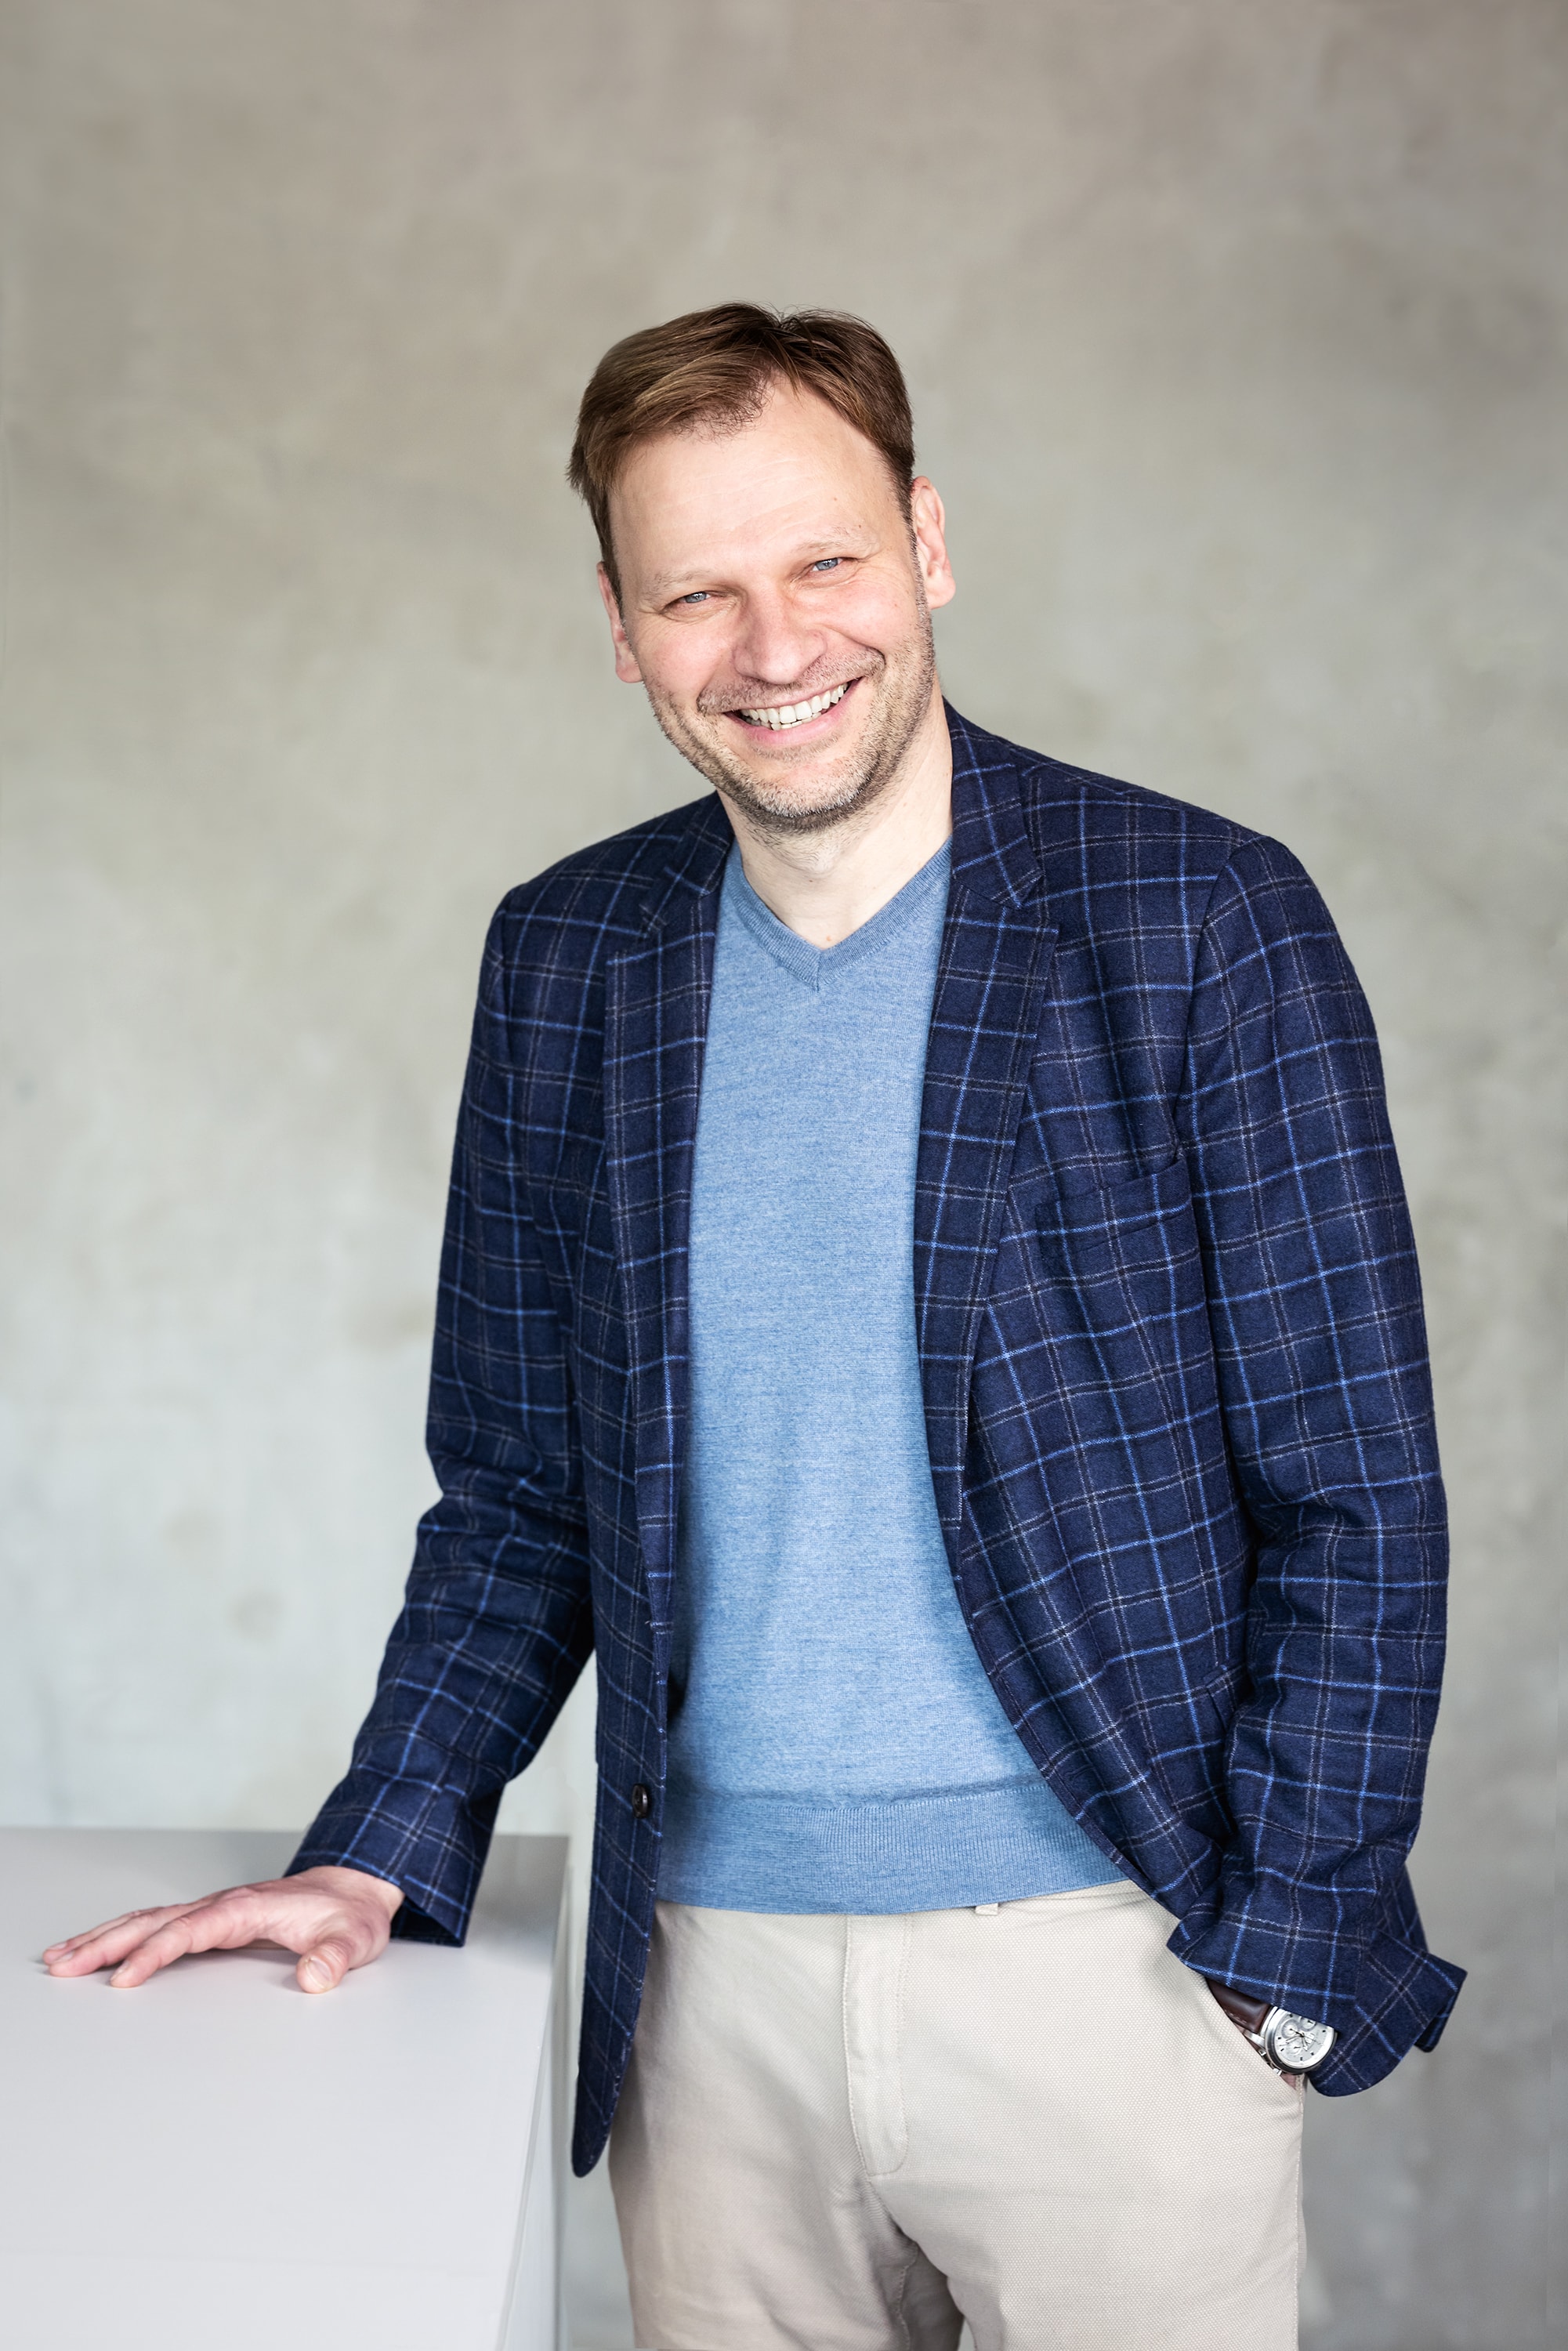 Marcel Sedlák, CEO